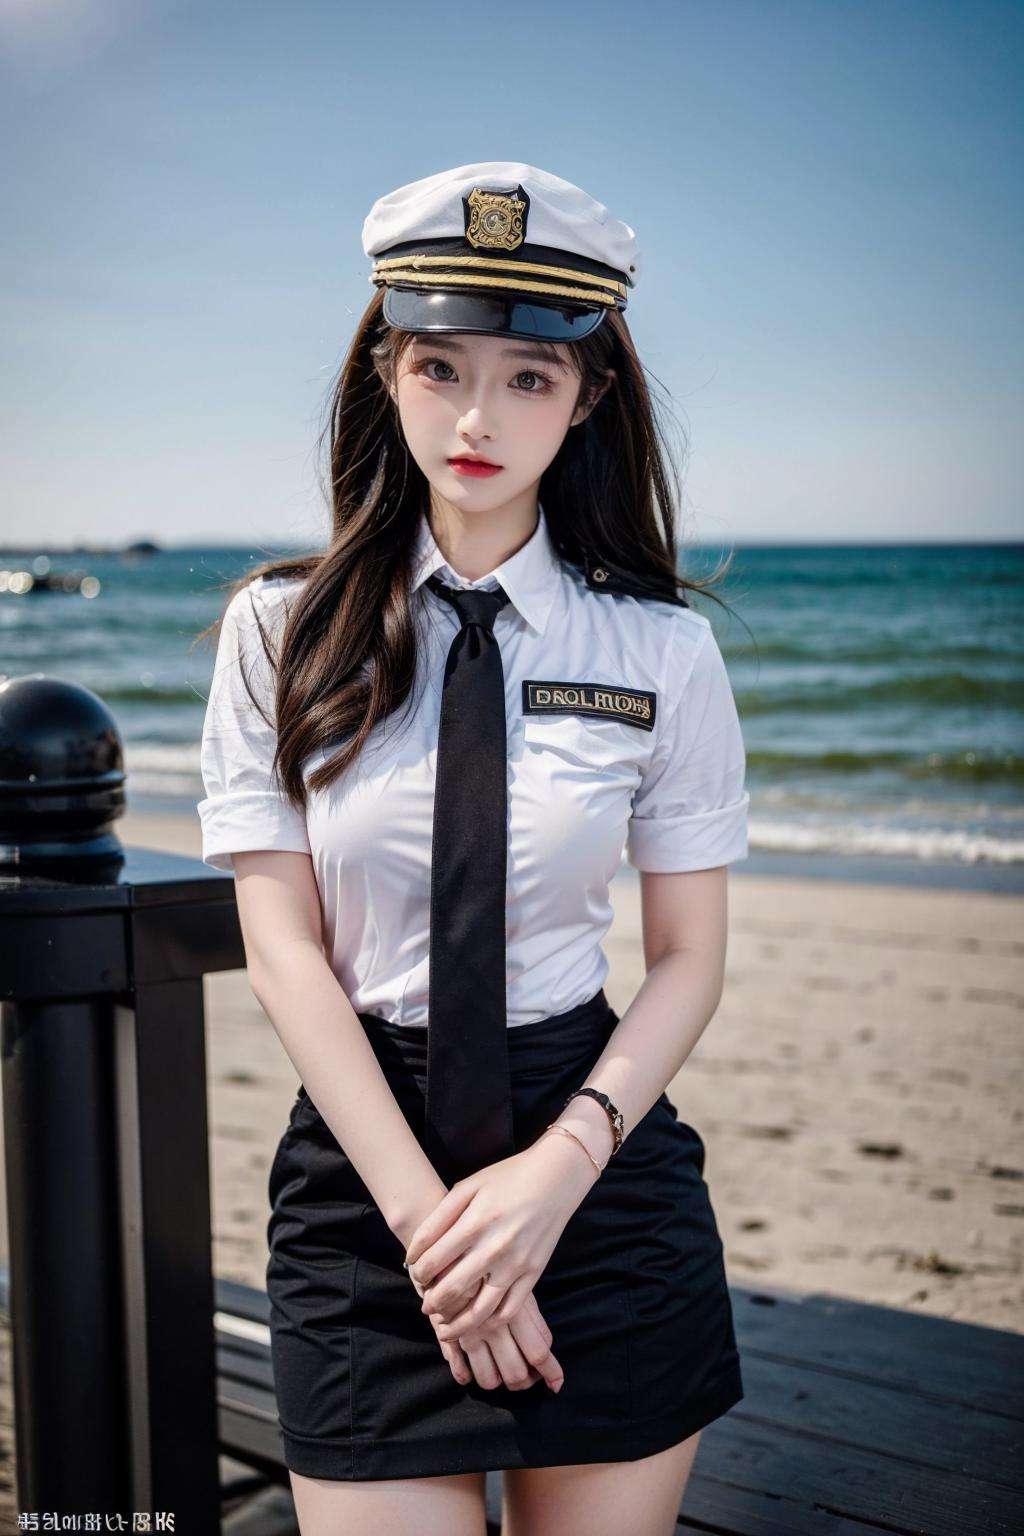 (best quality),[masterpiece],((beautiful:0.75) cute girl:0.75),(EOS R8,50mm,F1.2,8K,RAW photo:1.2),Professional,ultra-fine painting,1girl,long hair,outdoors,(front:1.3),cloud,sky,seaside background,standing,<lora:add_detail:0.6>,<lora:uniform11:0.75> uniform11,police uniform,hat